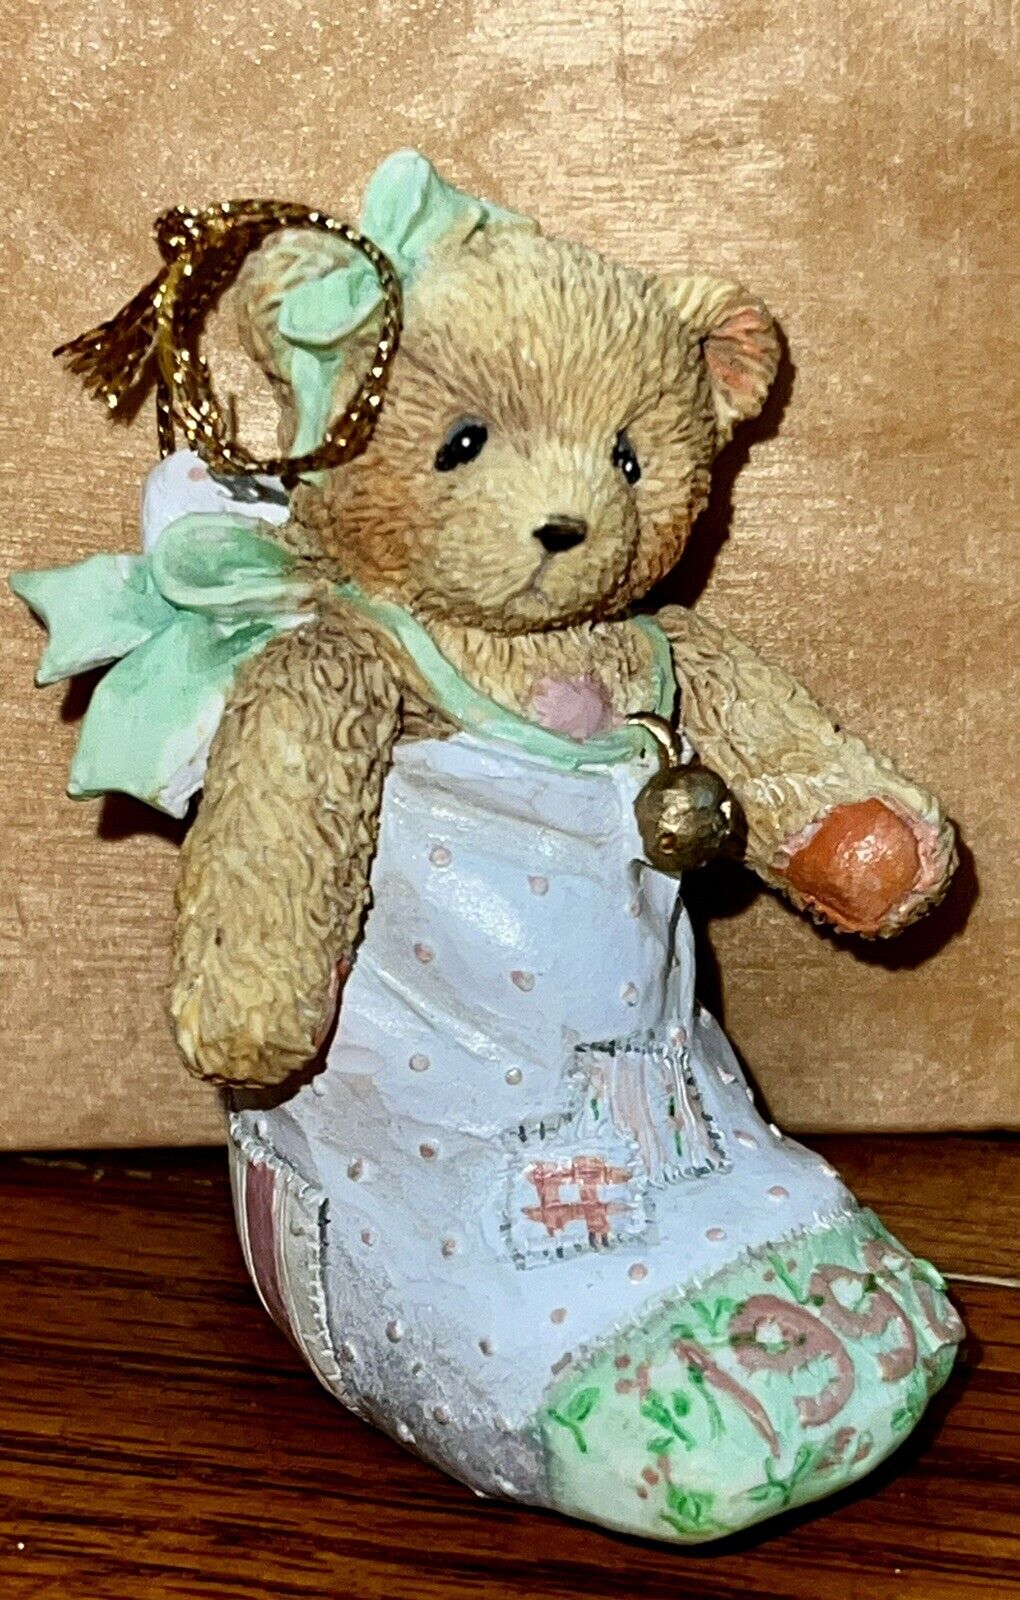 Buy 2 Get 1 Free Cherished Teddies-Christmas Ornament Bear in Stocking 1992